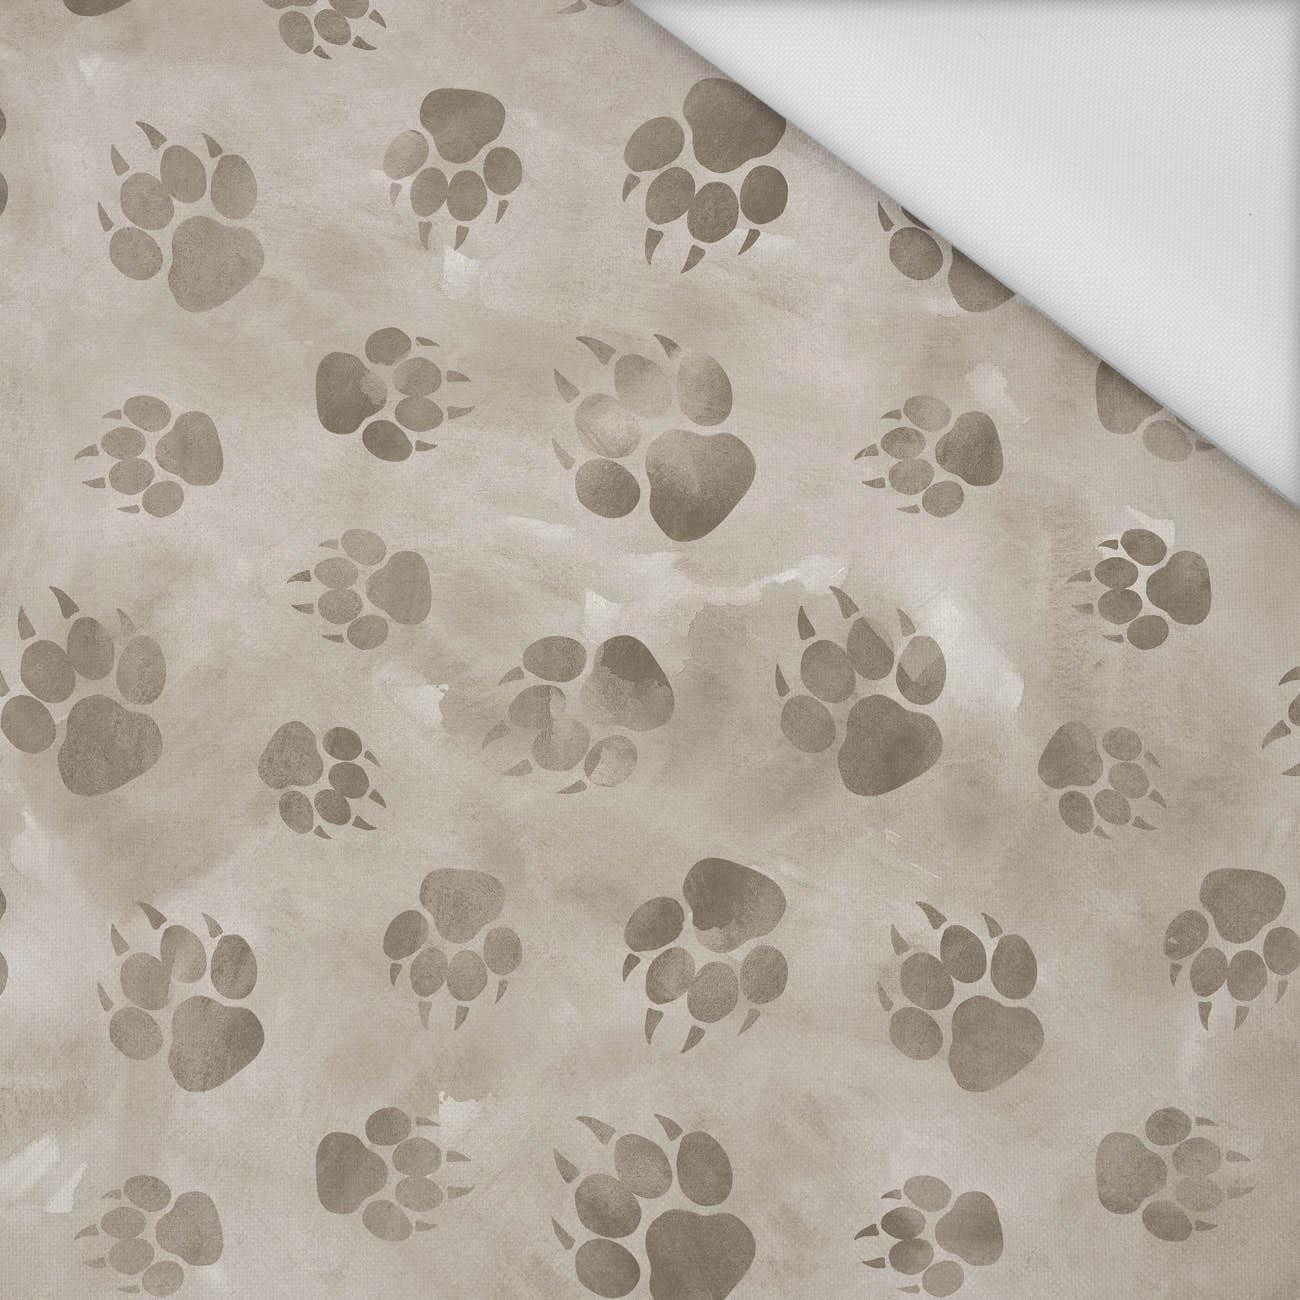 PAW PRINTS / BEIGE (SNOW LEOPARDS) - Waterproof woven fabric